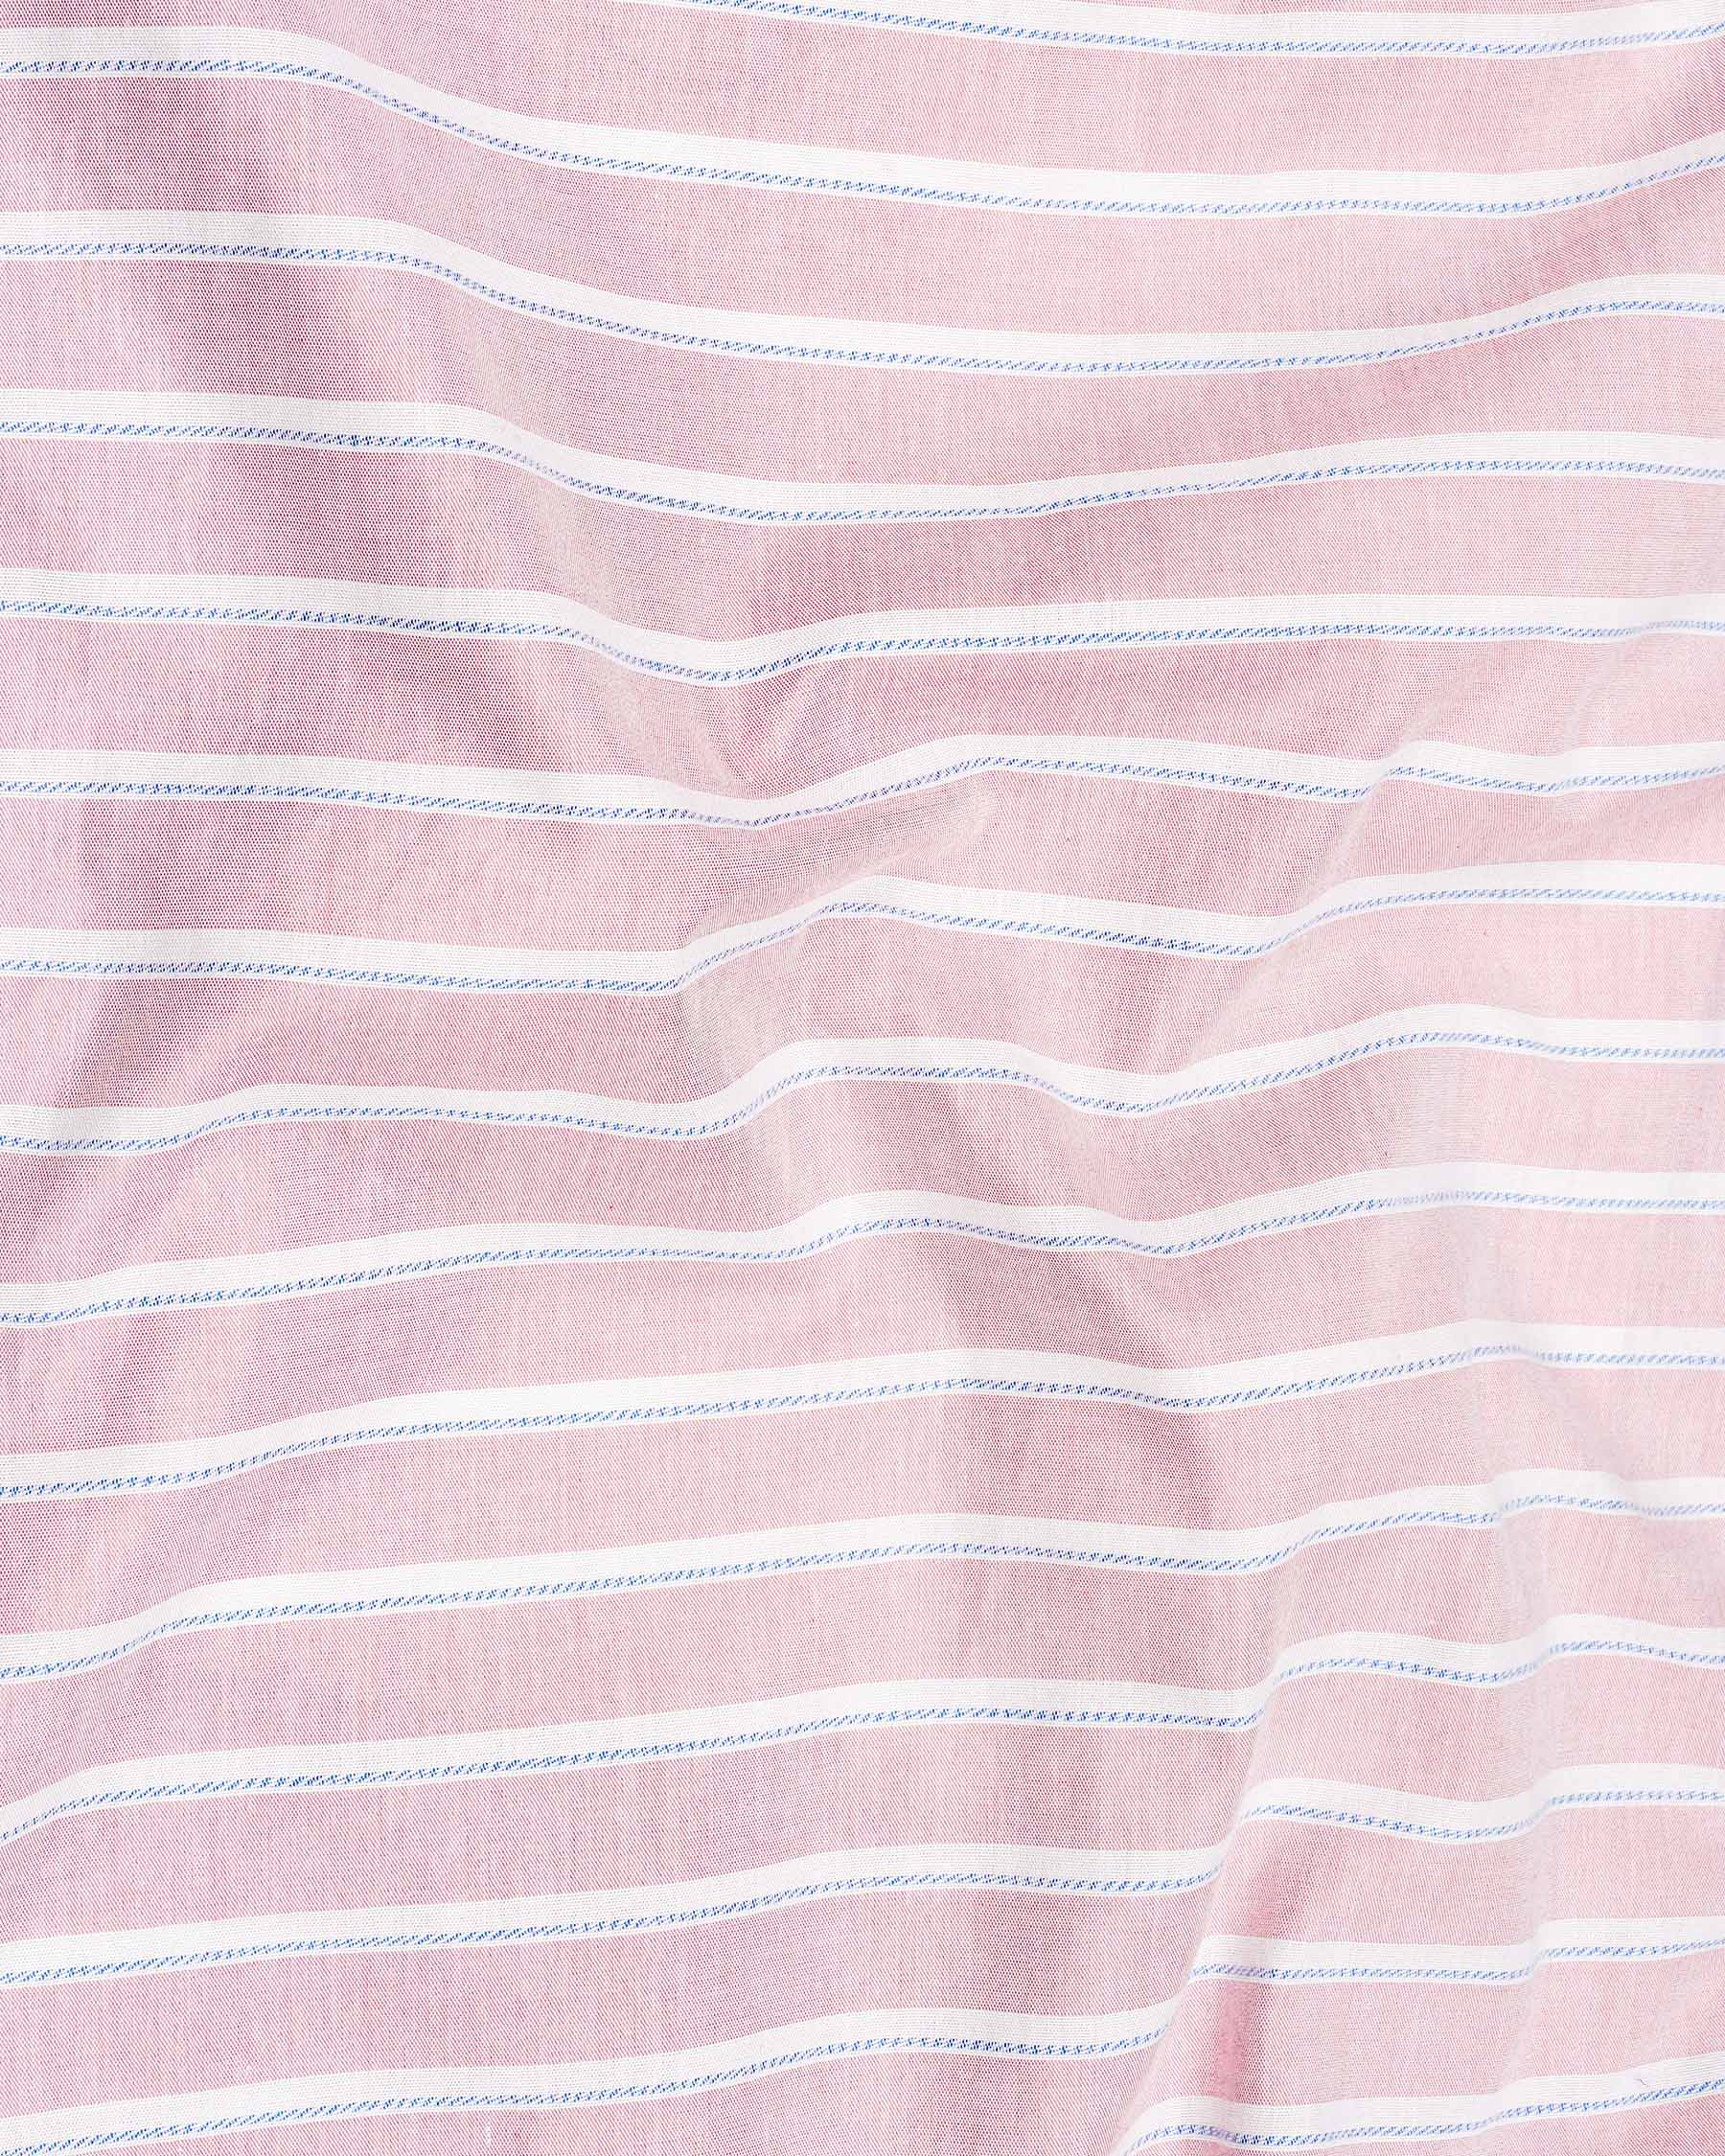 Twilight Pink With White Striped Dobby Textured Premium Giza Cotton Shirt 7913-M-MN-38, 7913-M-MN-H-38, 7913-M-MN-39, 7913-M-MN-H-39, 7913-M-MN-40, 7913-M-MN-H-40, 7913-M-MN-42, 7913-M-MN-H-42, 7913-M-MN-44, 7913-M-MN-H-44, 7913-M-MN-46, 7913-M-MN-H-46, 7913-M-MN-48, 7913-M-MN-H-48, 7913-M-MN-50, 7913-M-MN-H-50, 7913-M-MN-52, 7913-M-MN-H-52